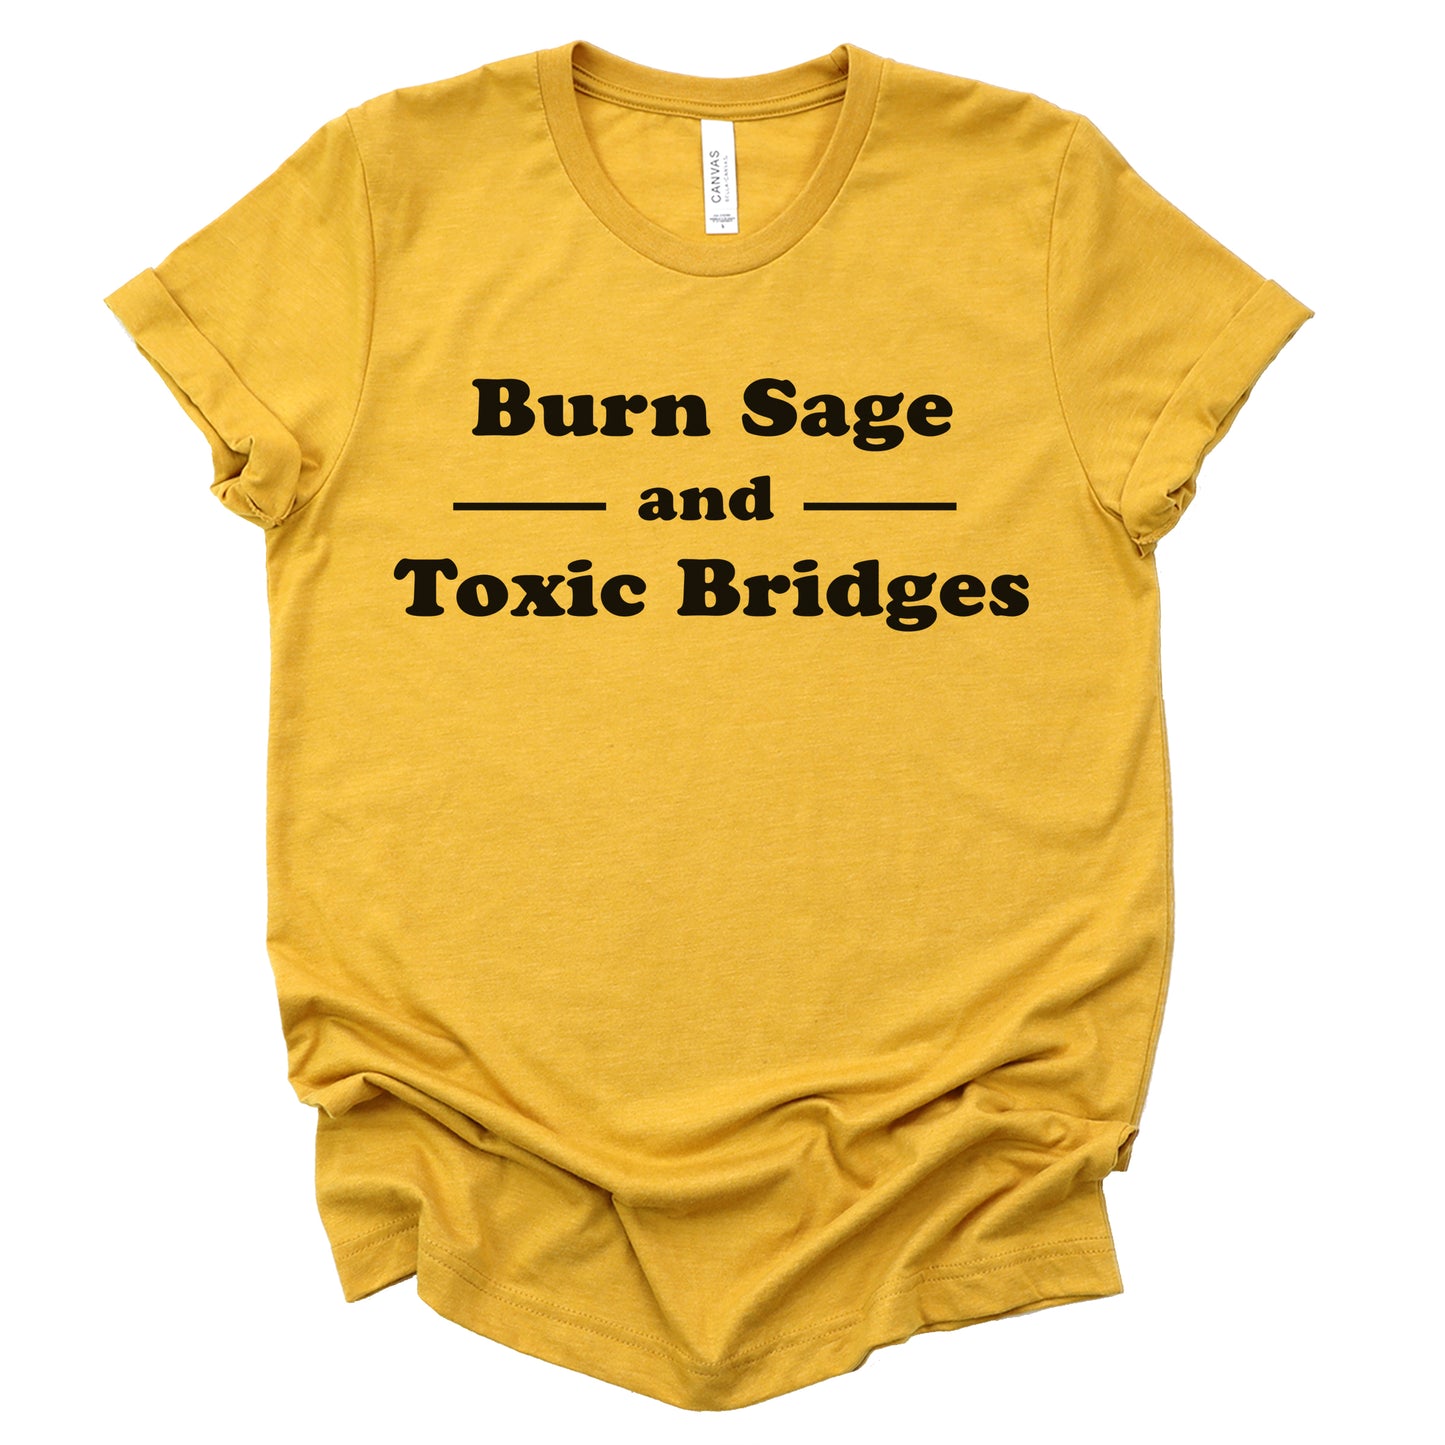 "Burn Sage and Toxic Bridges" Tee